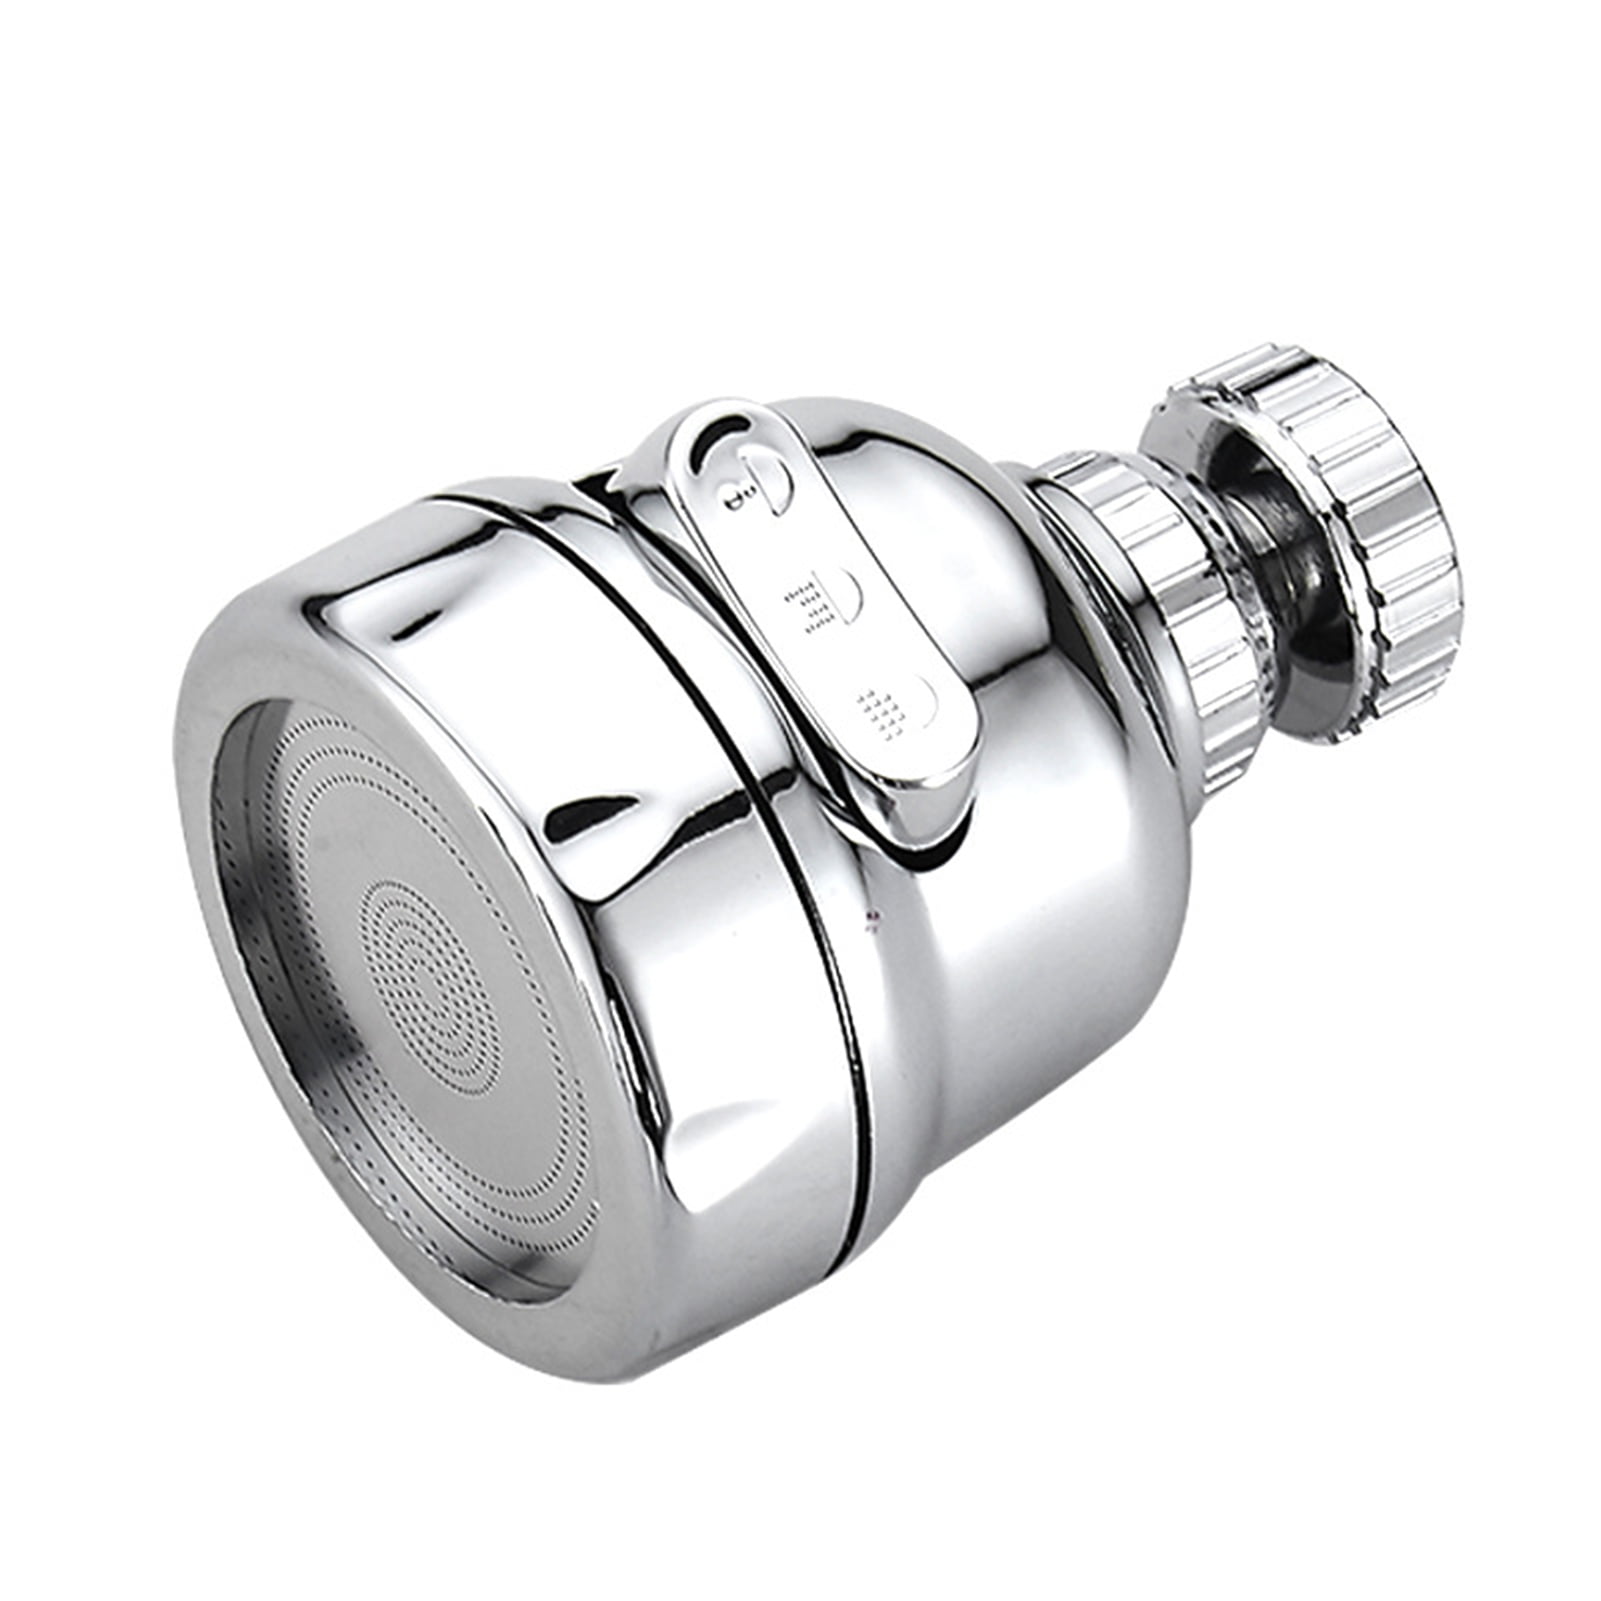 Details about   1x 360° Saving Sink Tap Head Water Faucet extender Aerator Spray Sprayer Kitchen 